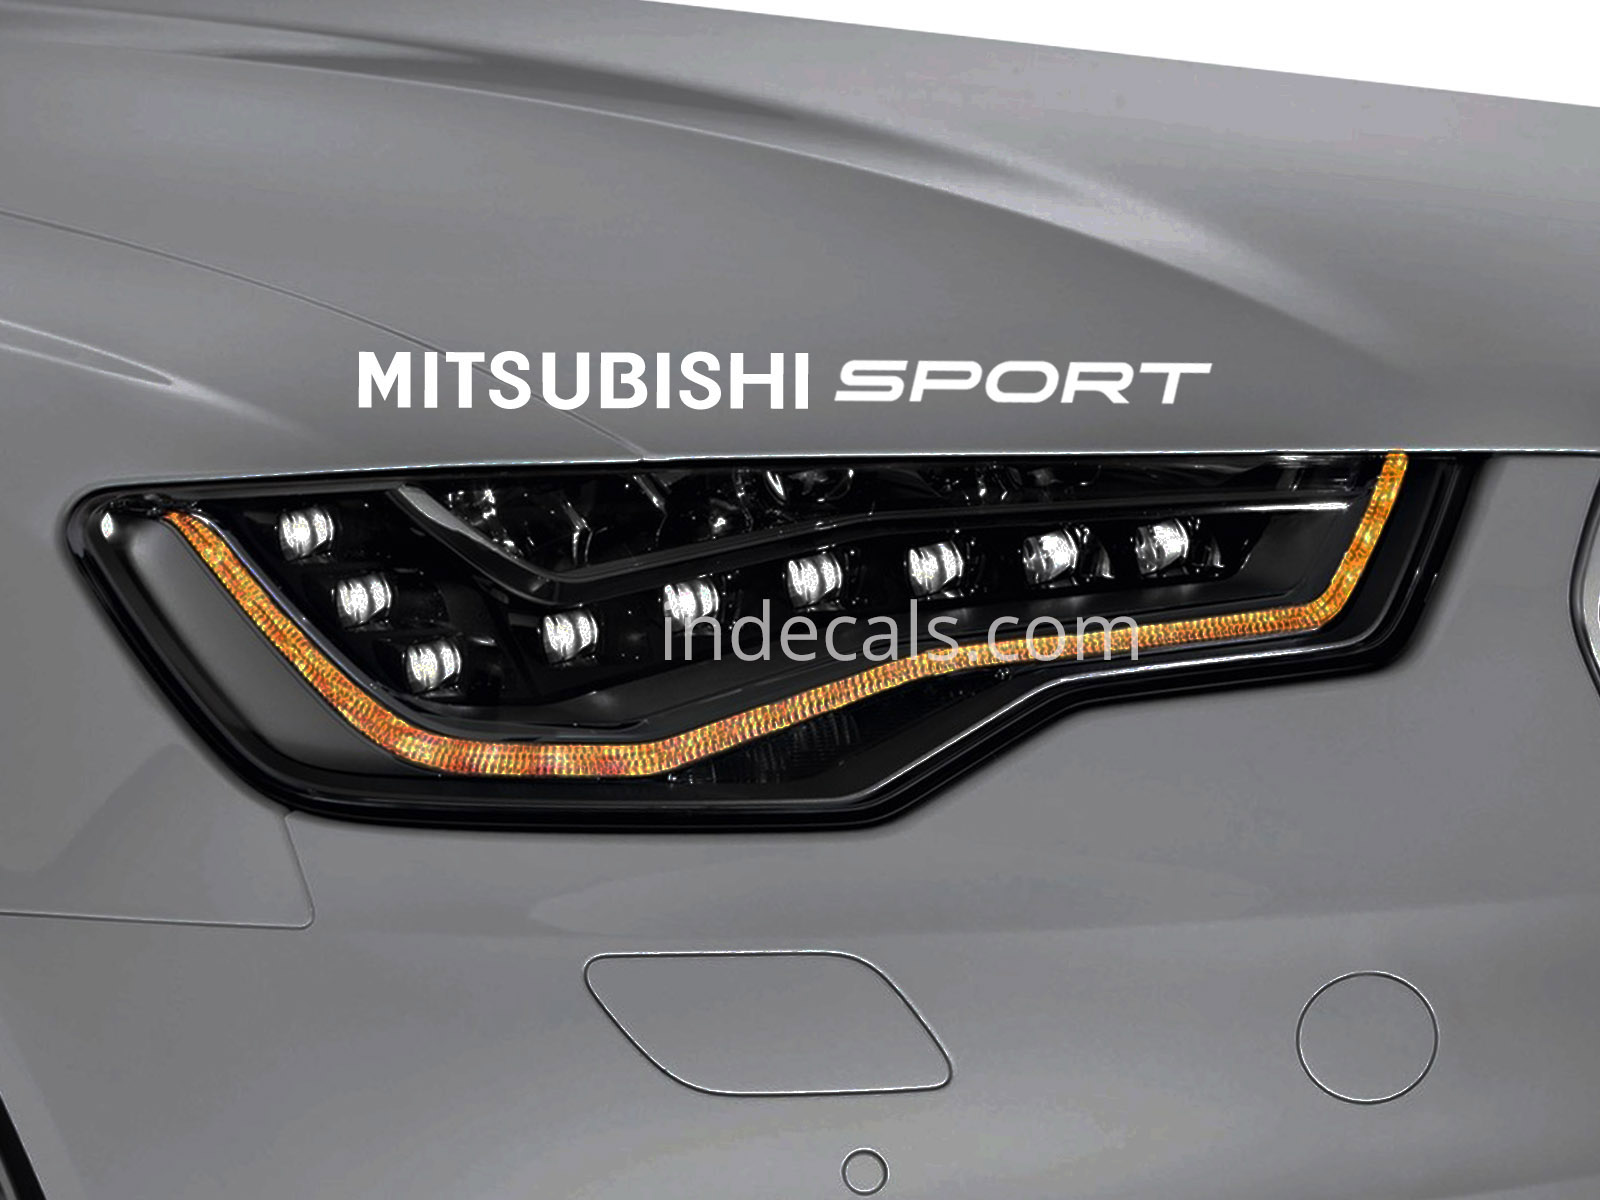 1 x Mitsubishi Sport Sticker for Eyebrow - White